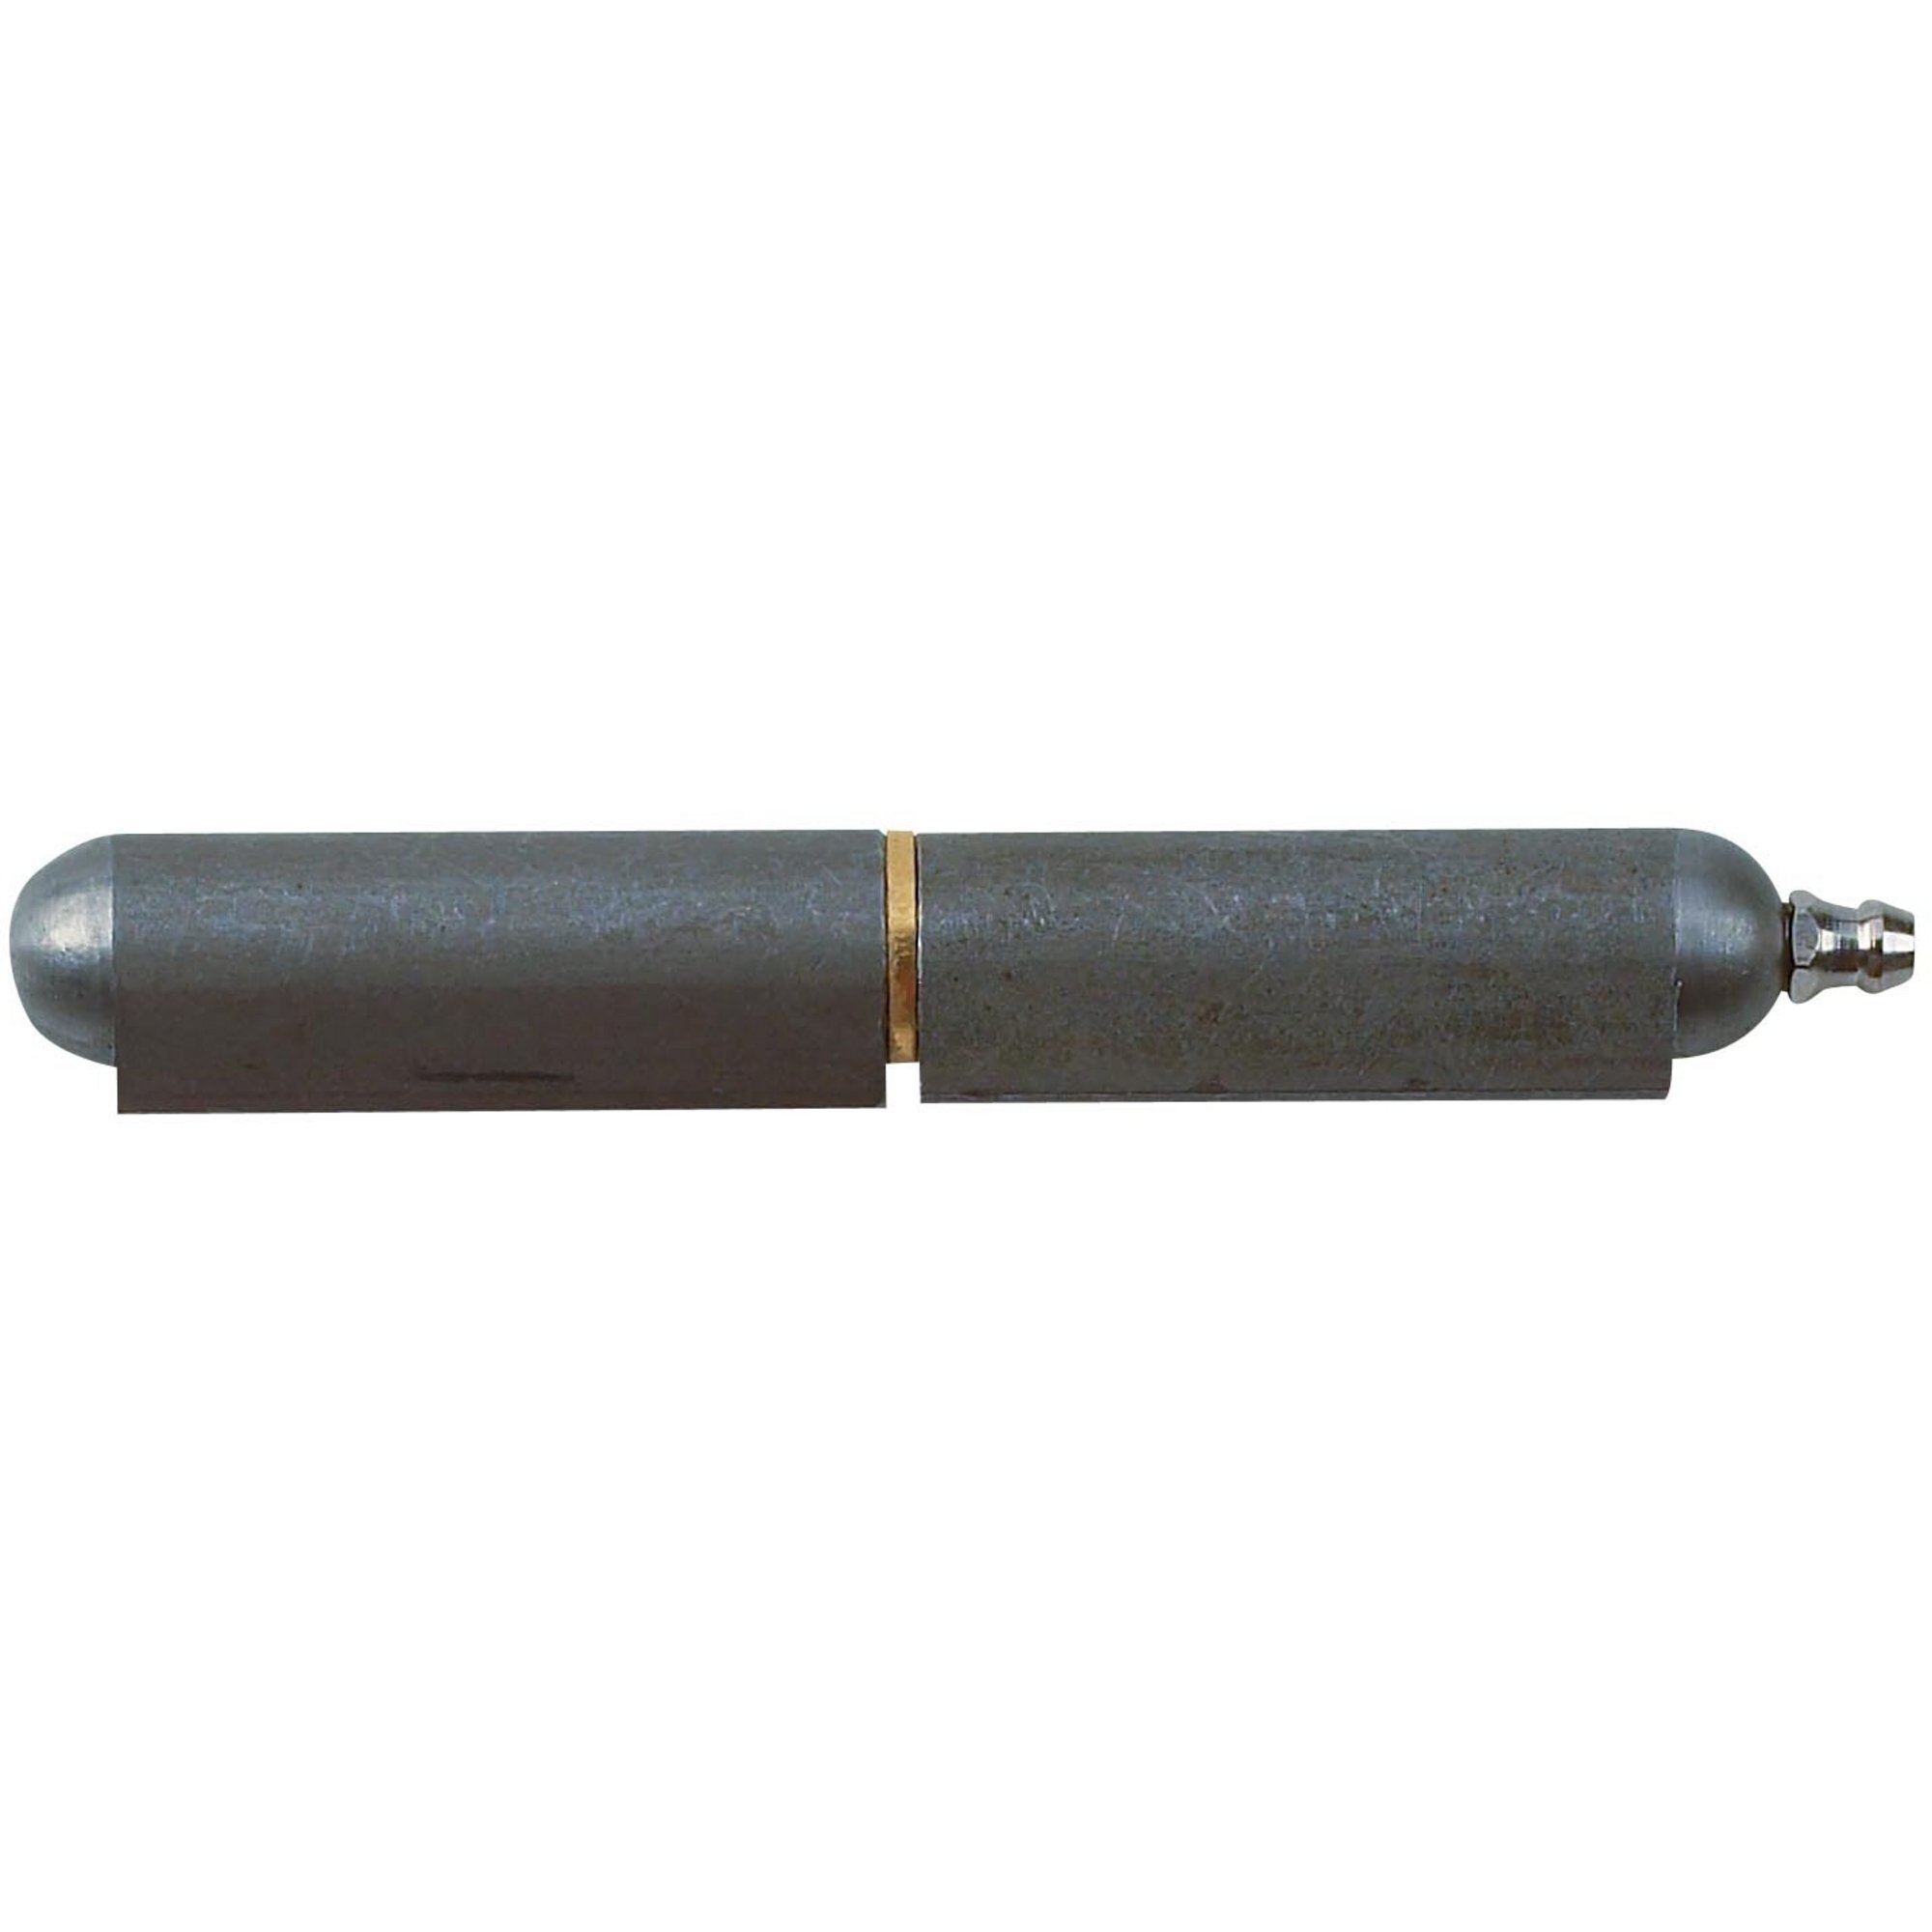 Buyers Weld-On Bullet Hinge, 4-3/4Inch (120mm) x 19.5mm; 10mm Diameter Pin, Model FBP120GF